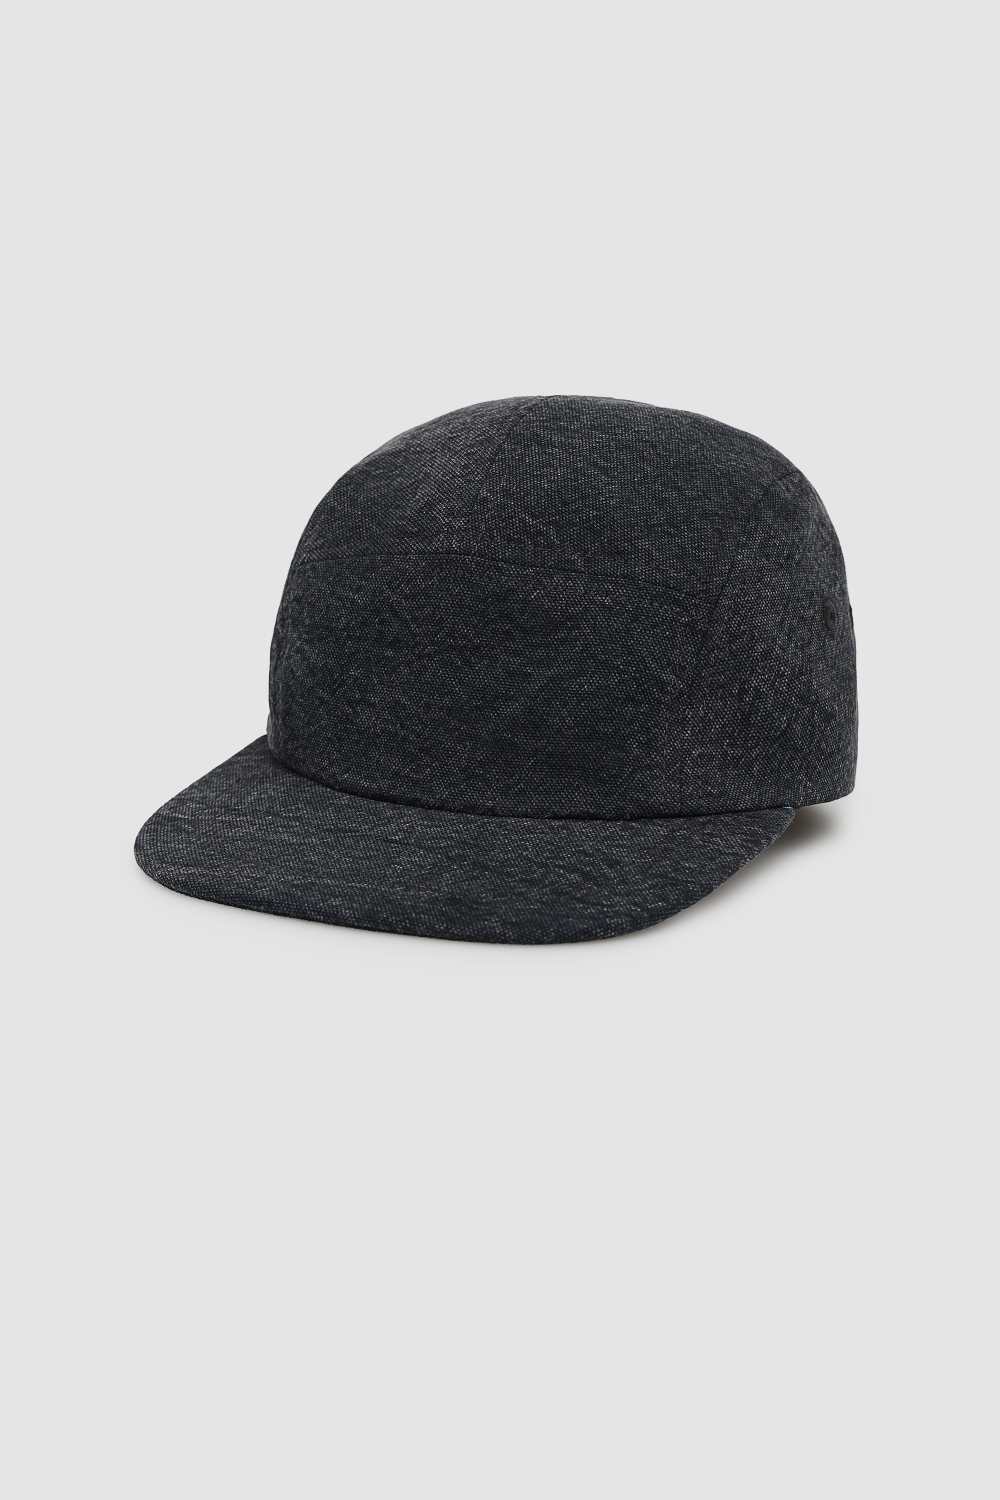 Vintage Black 5 Panel Hat